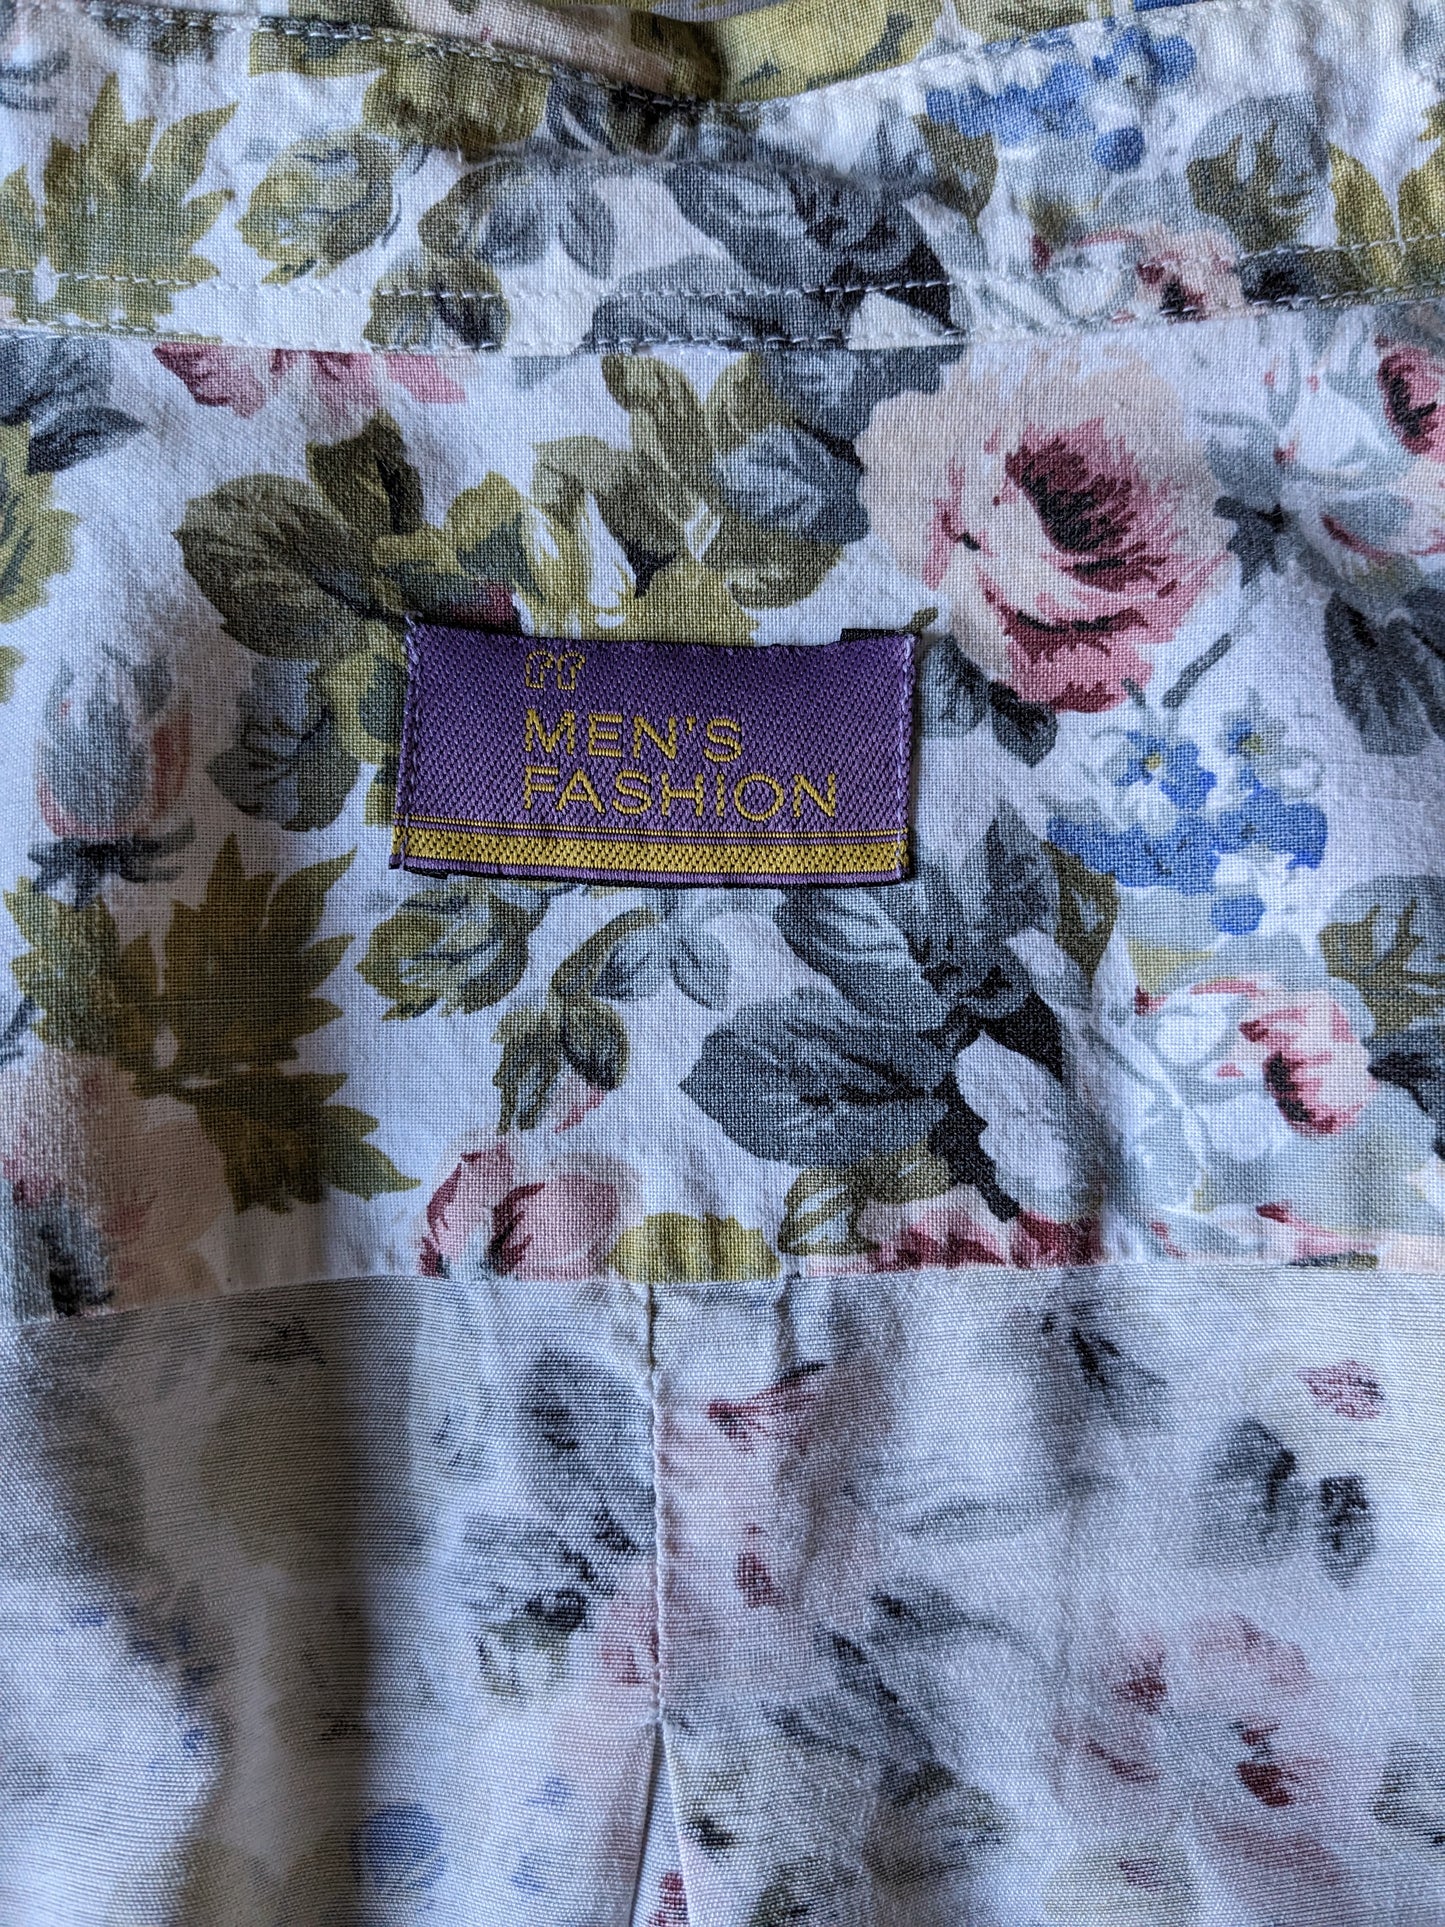 Vintage Men's Fashion overhemd. Roze Groen Roze bloemen print. Maat 41 / 42 - L.